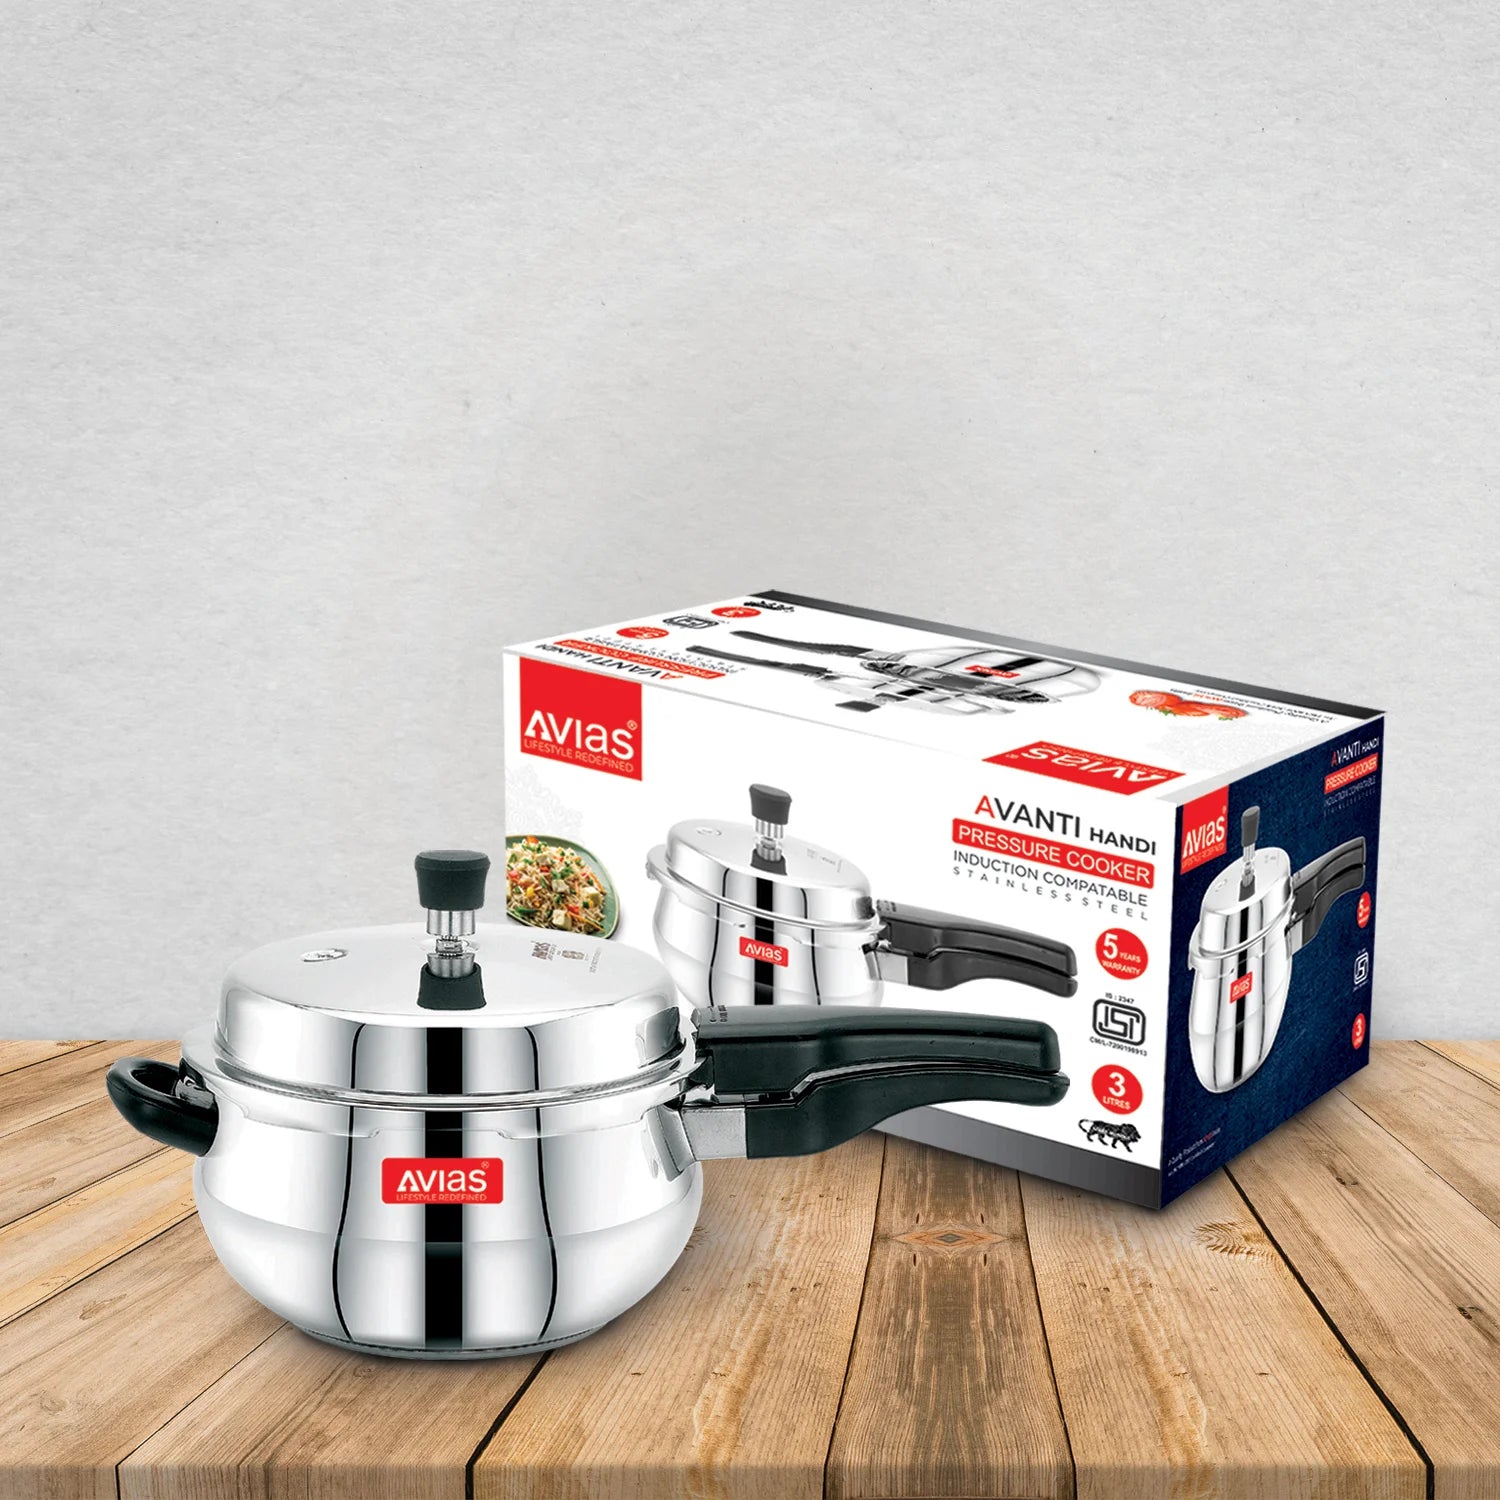 AVIAS Avanti Handi high-quality stainless steel pressure cooker package